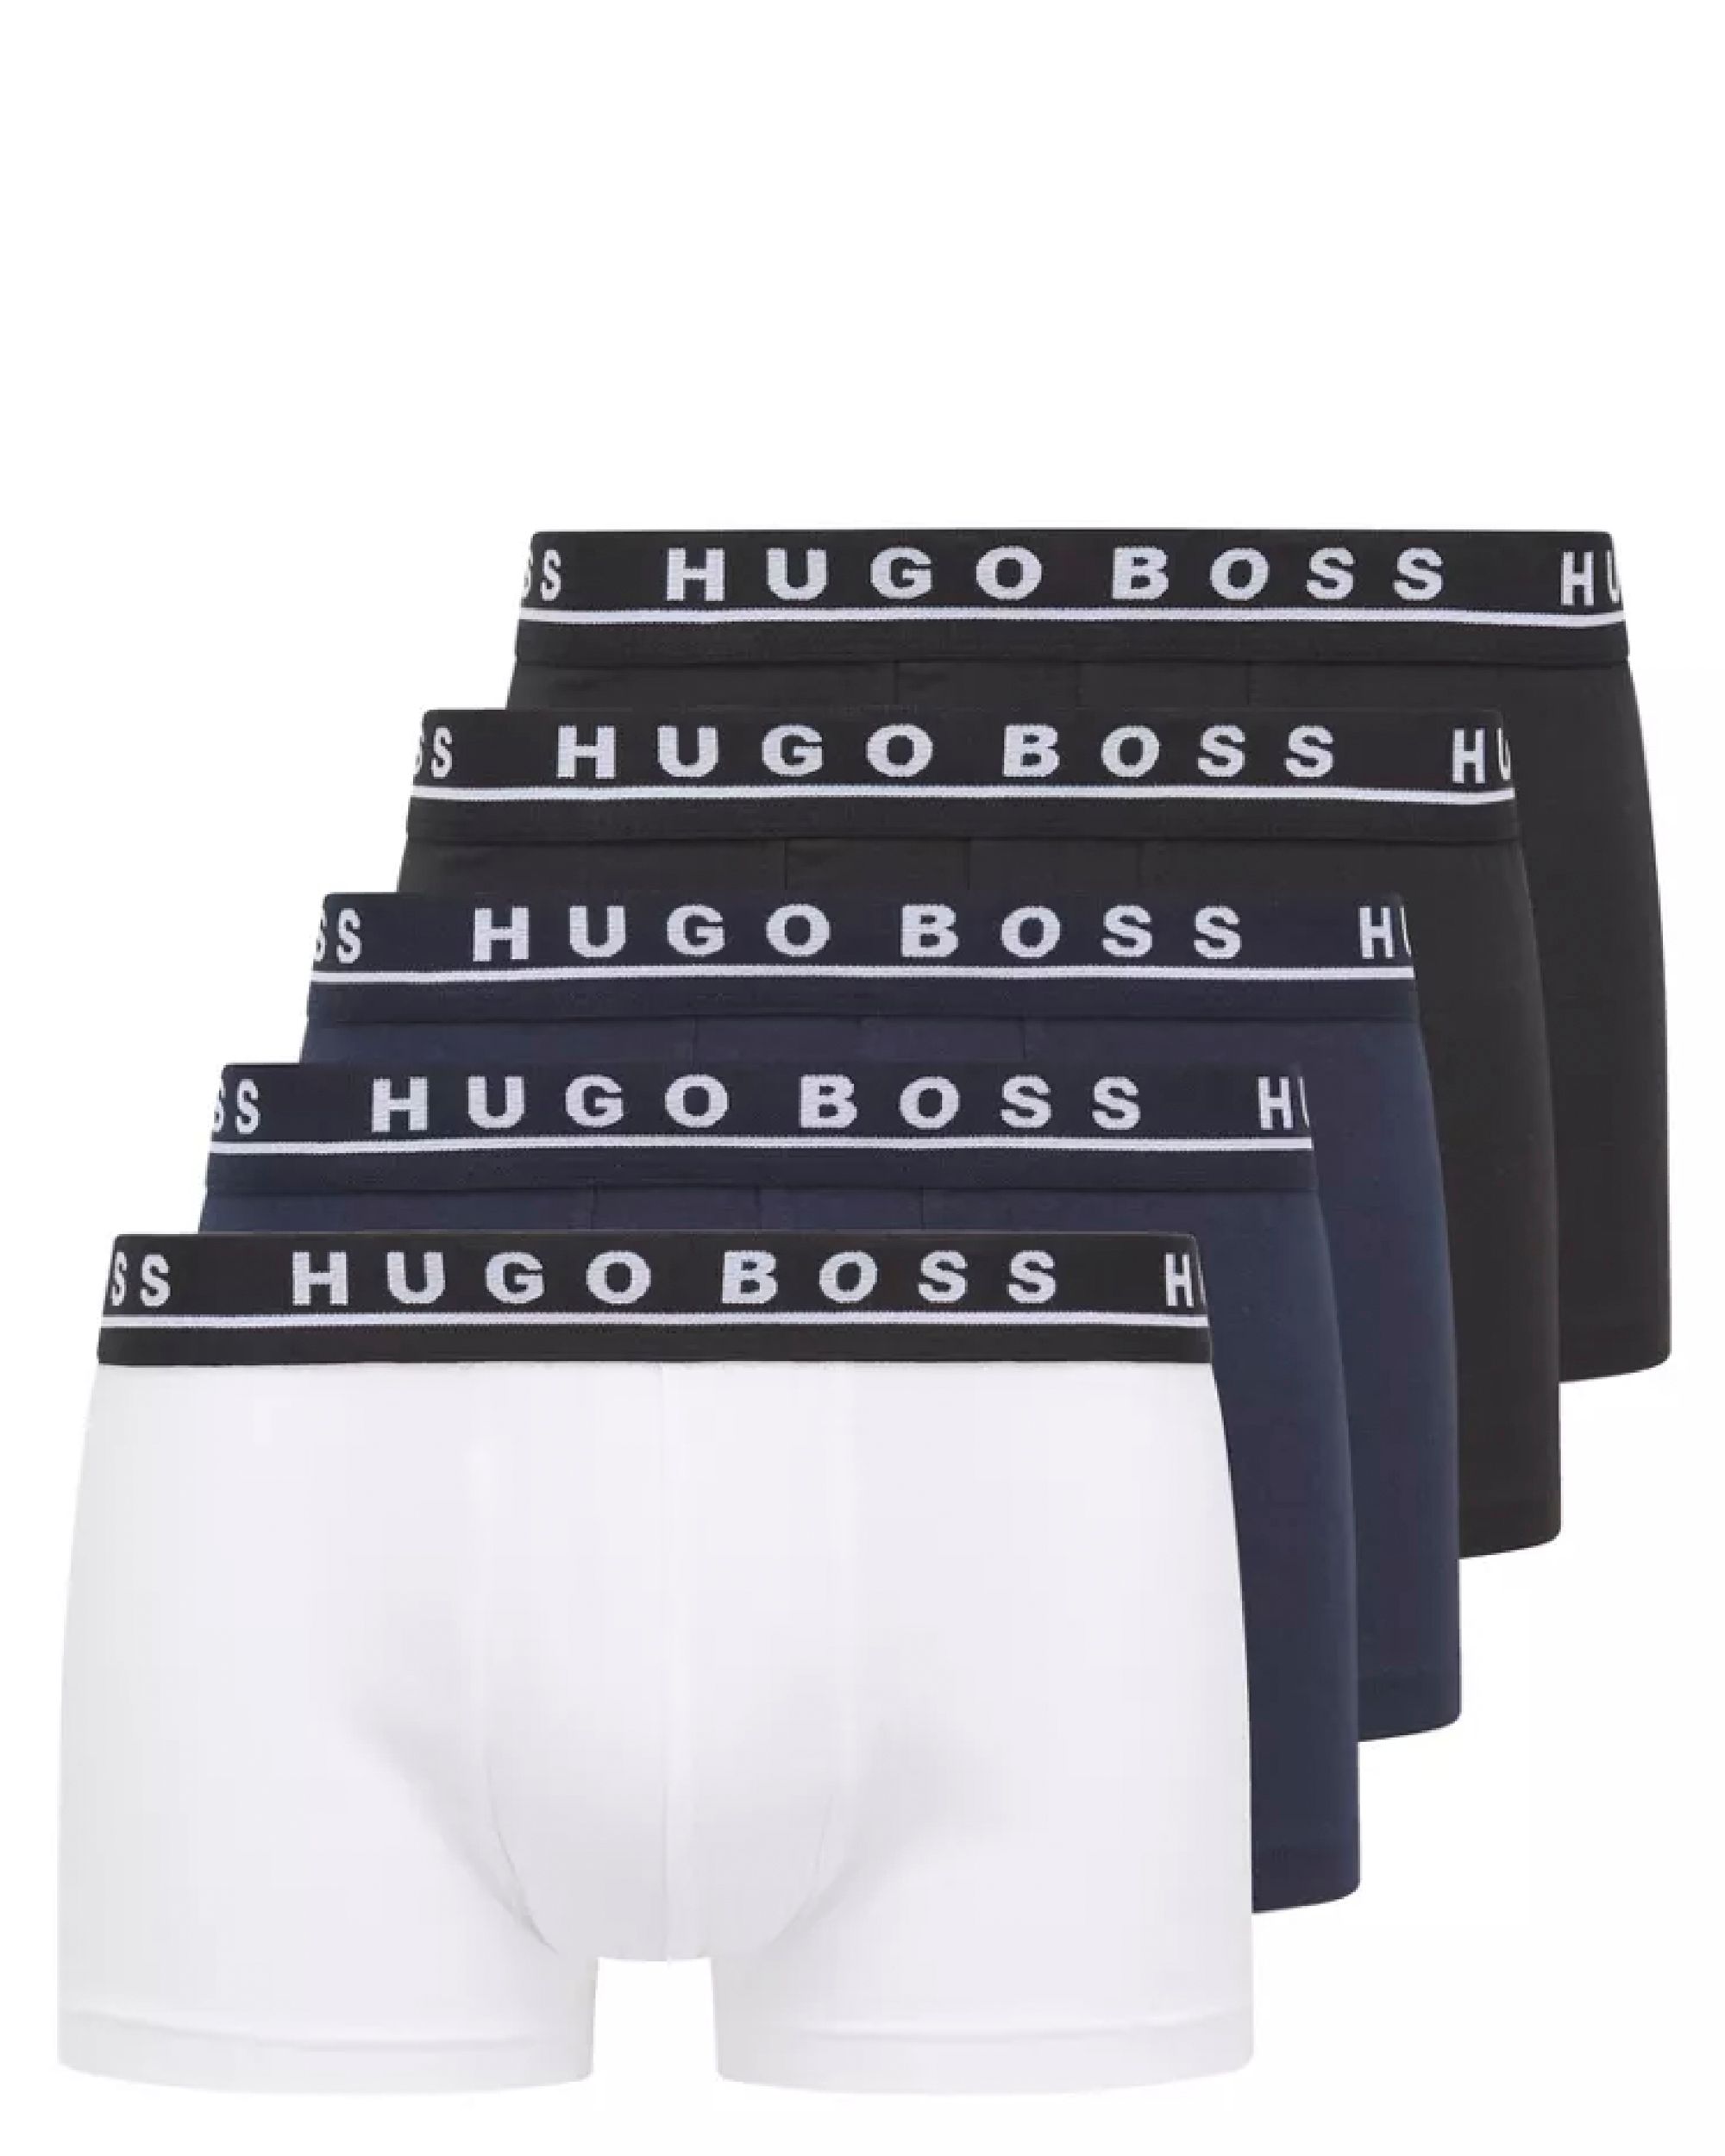 Hugo Boss Menswear Boxershort Blauw 082269-002-L